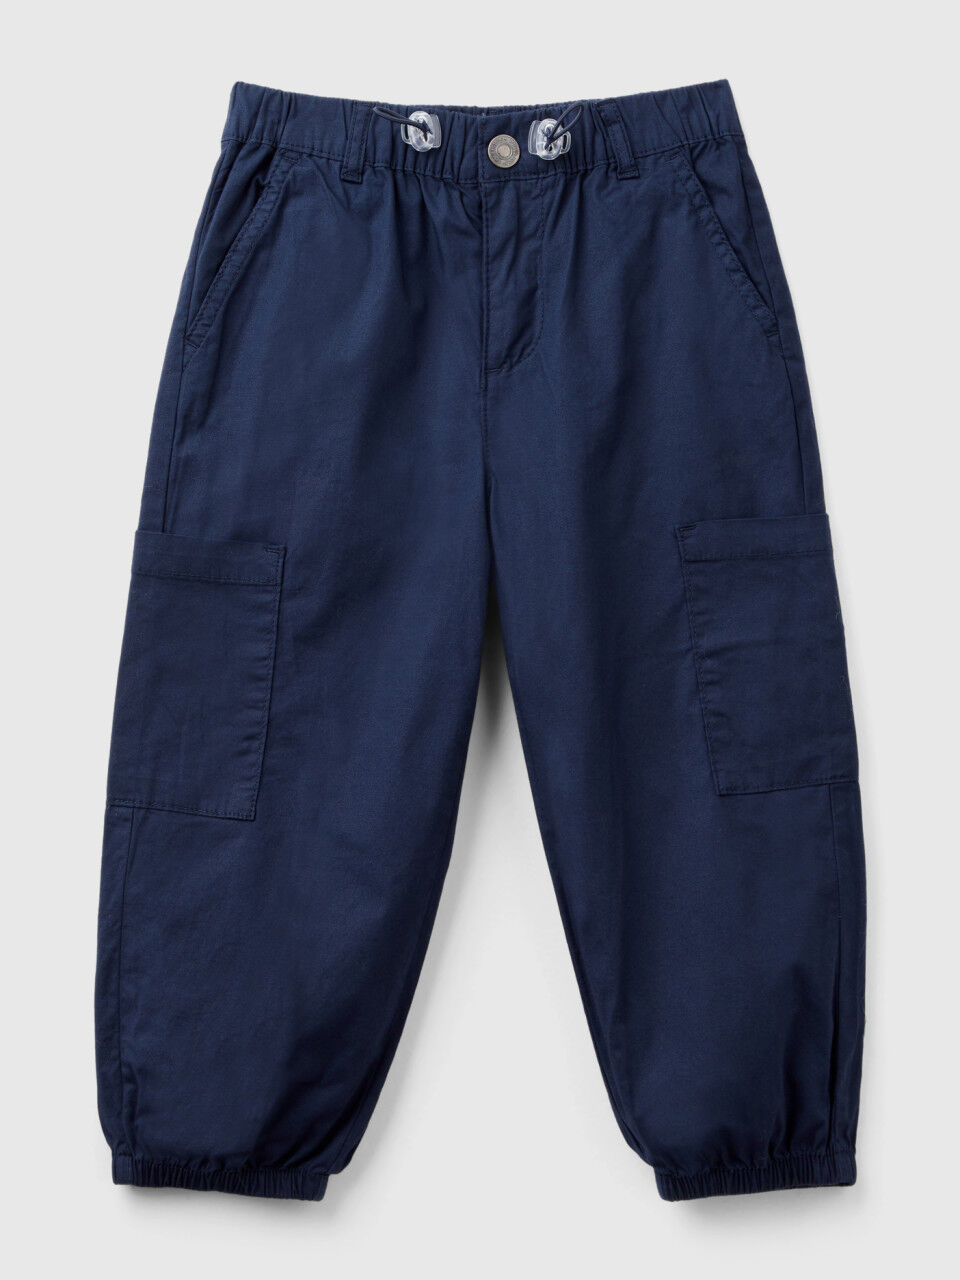 Jeans & Pants | Men's 🚹 Cotton Full Pant 👖 | Freeup